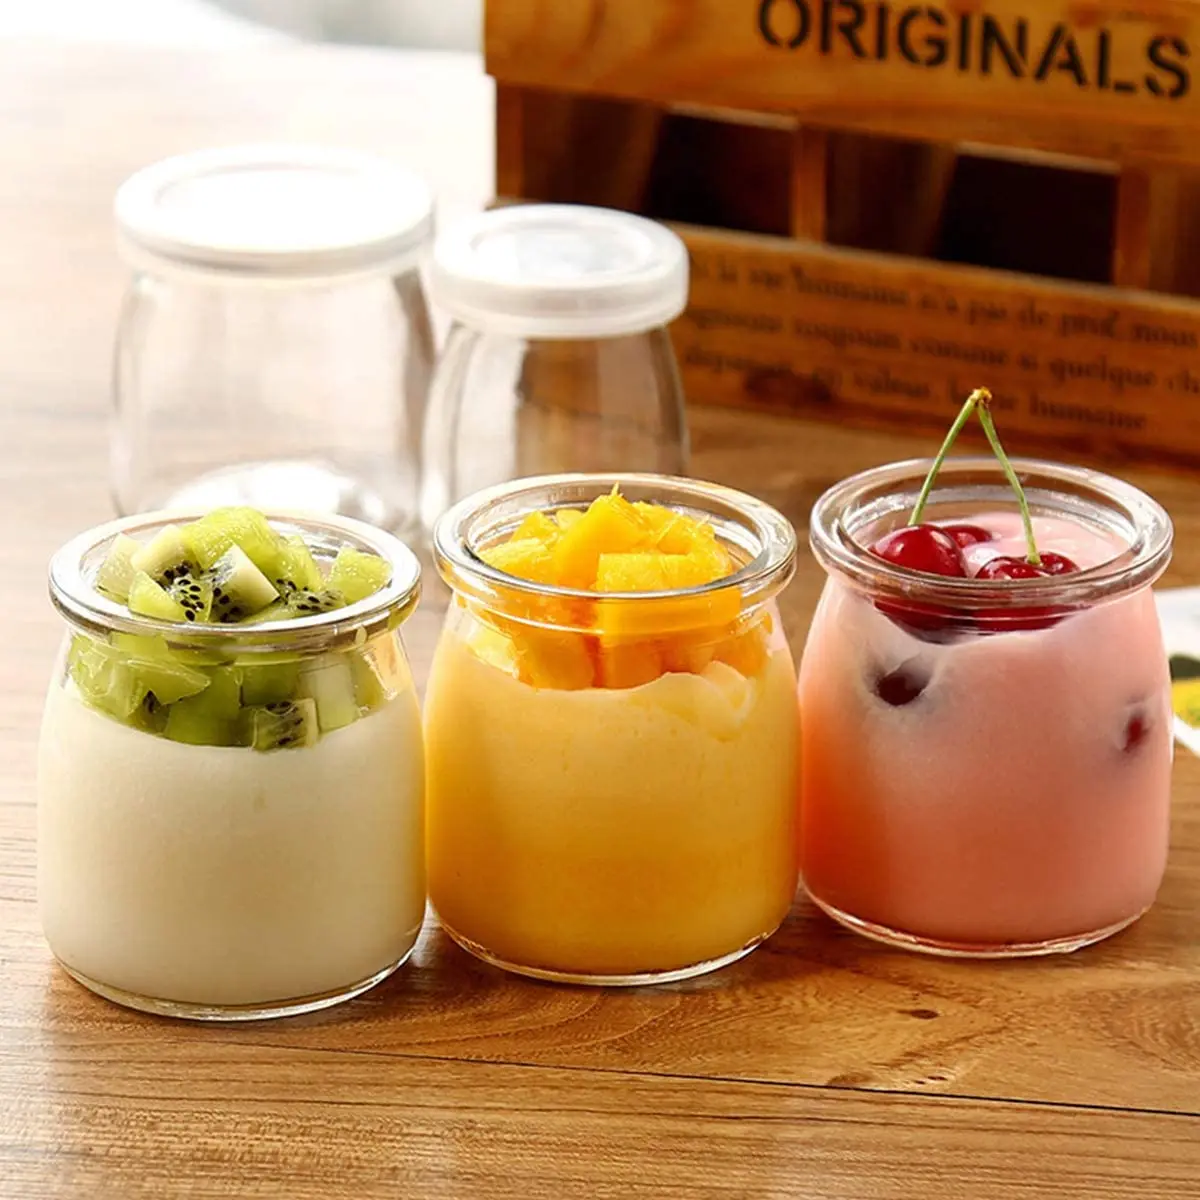 6 Jars Yoghurt Jars pudding Jar with Lid Yogurt Glass with Plastic Cap  Replacement Glass Jars for Yogurt Maker Yogurt Glass with Plastic Cap PE  CAP